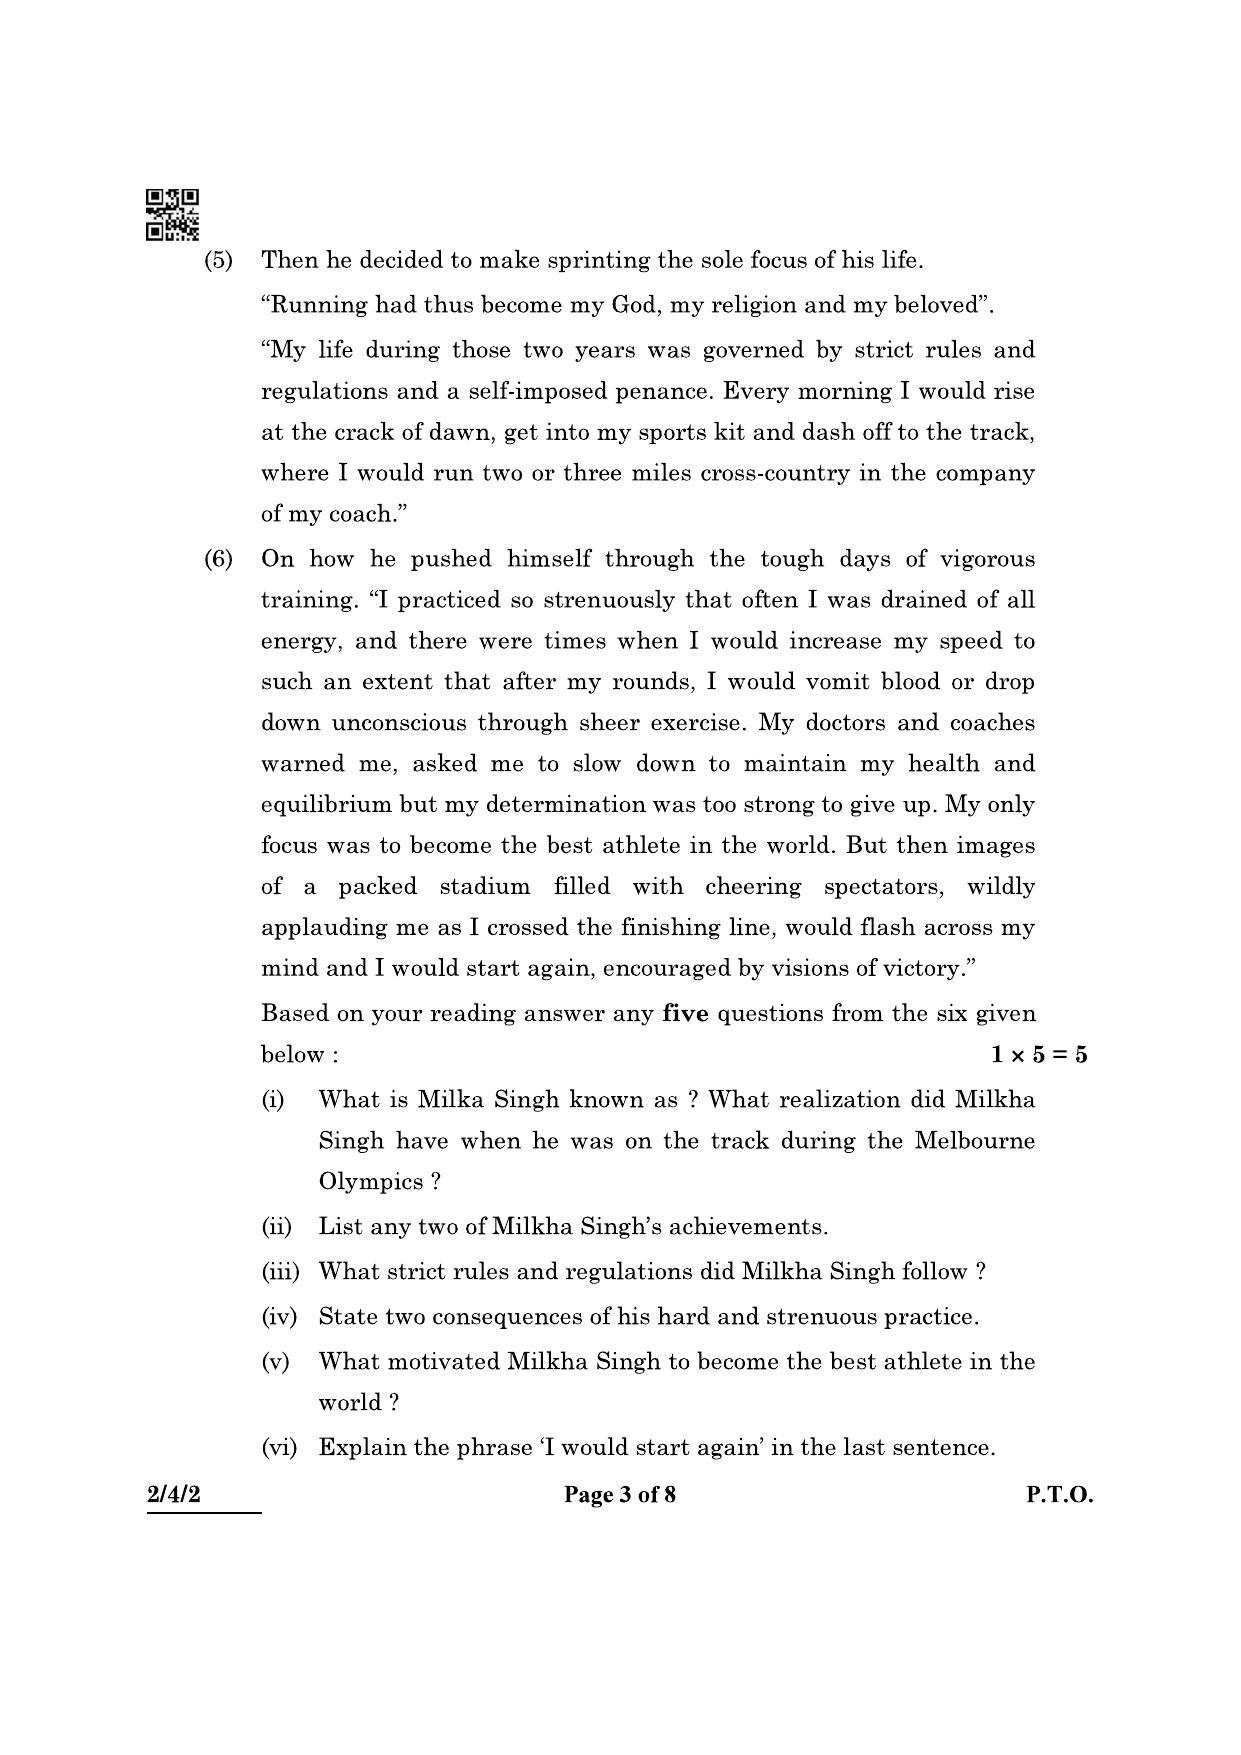 CBSE Class 10 2-4-2 (English L & L) 2022 Question Paper - Page 3